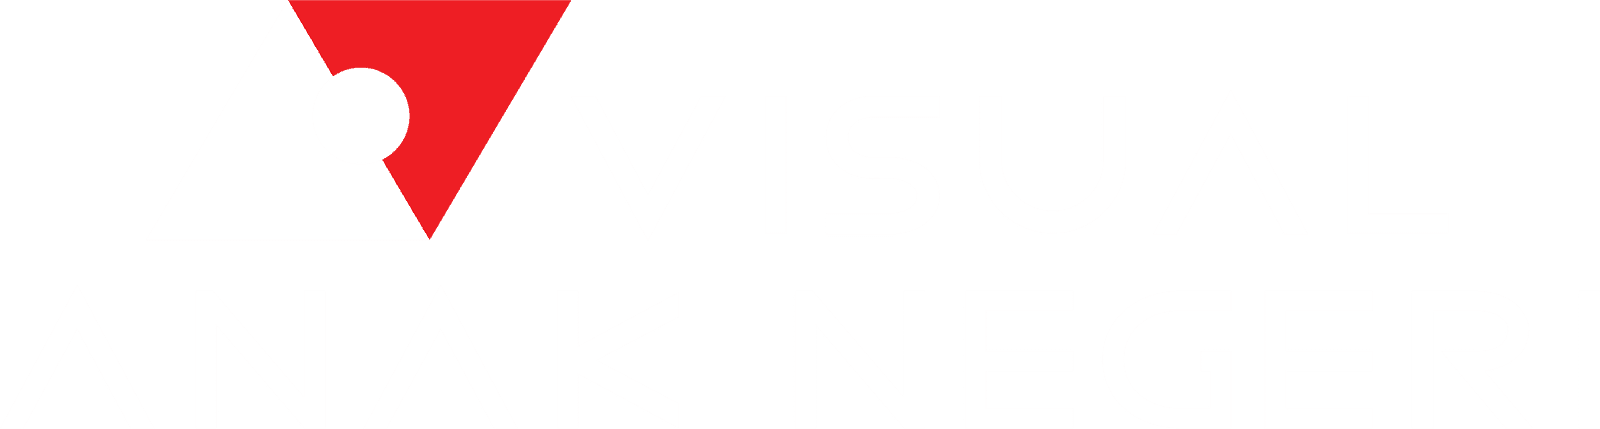 Visual Anak Negeri Logo